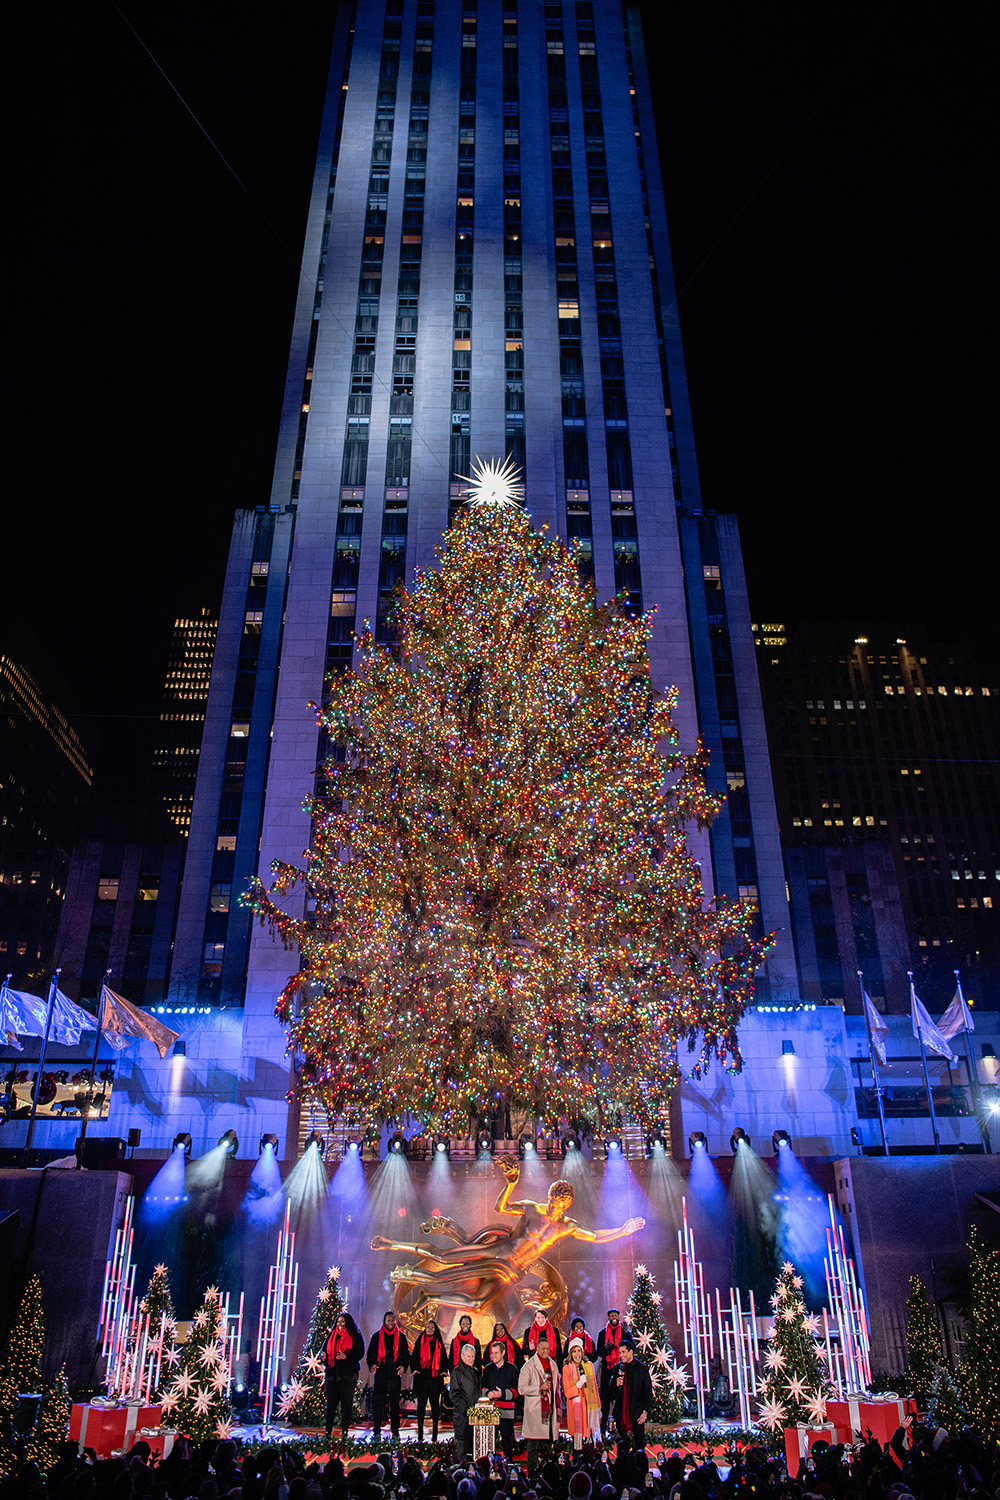 The Swarovski Star Illuminates Rockefeller Center Christmas Tree in New